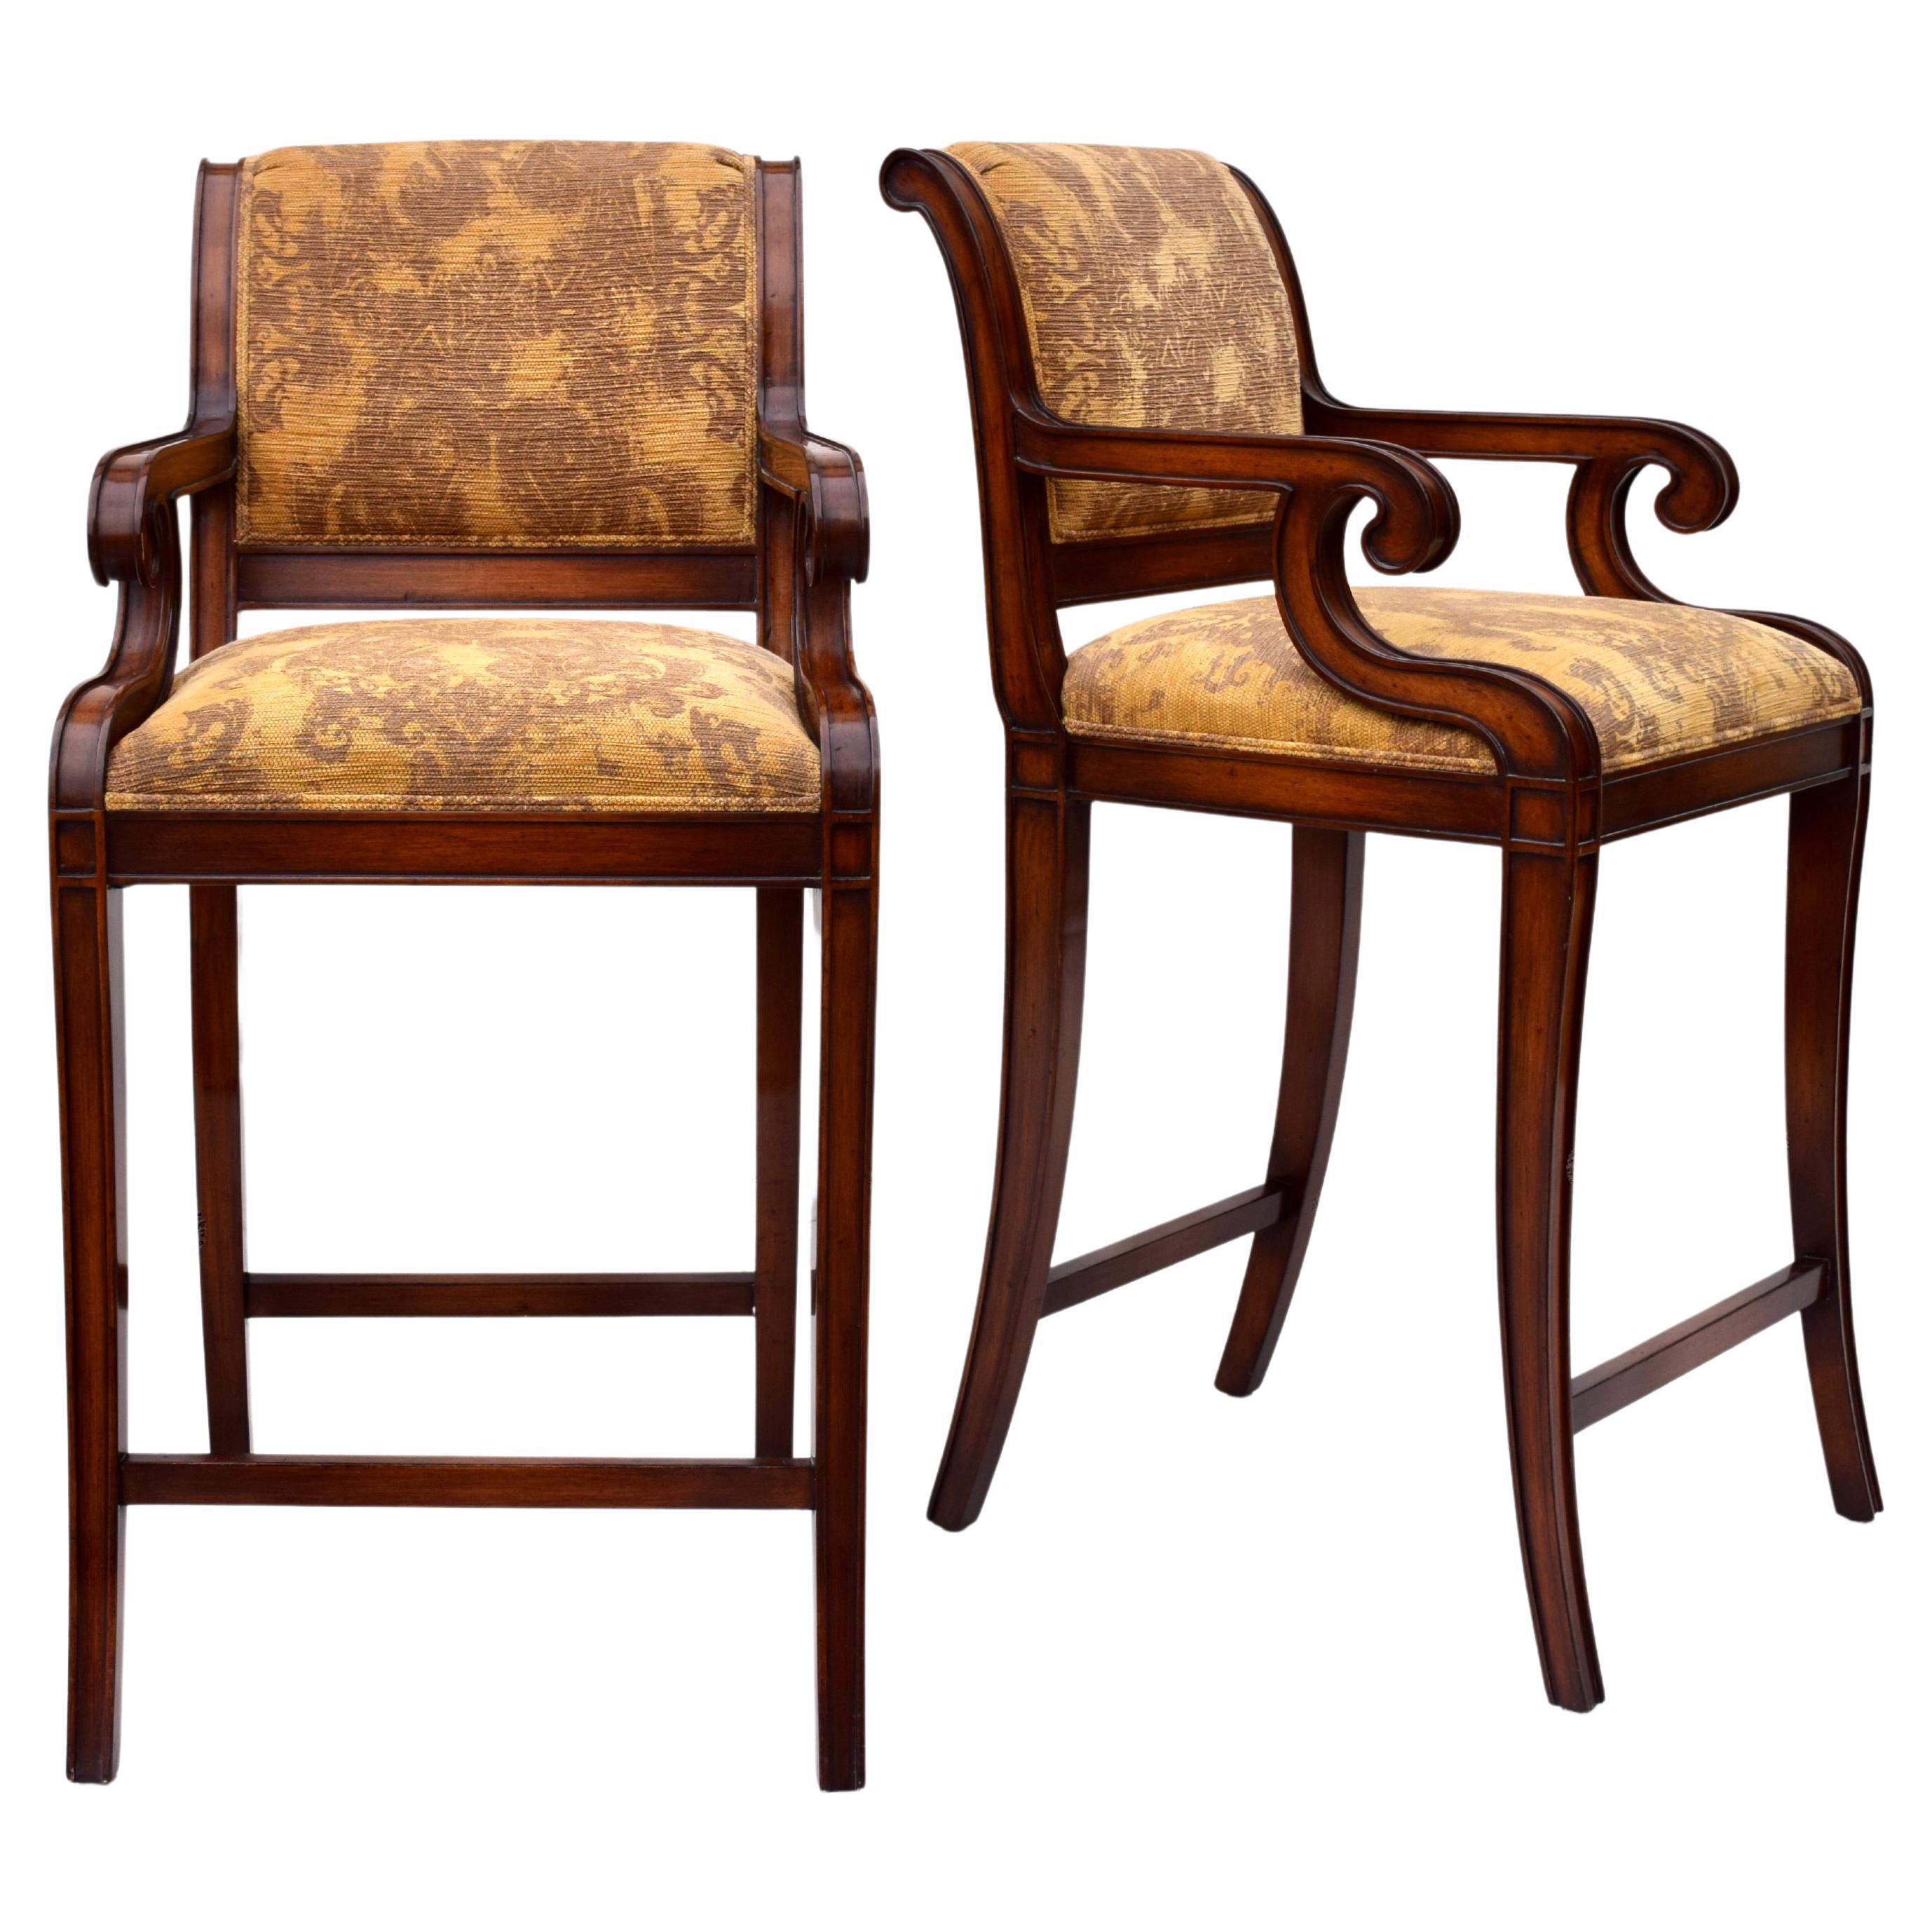 Nancy Corzine Classic Regency Bar Stool Chairs, Pair